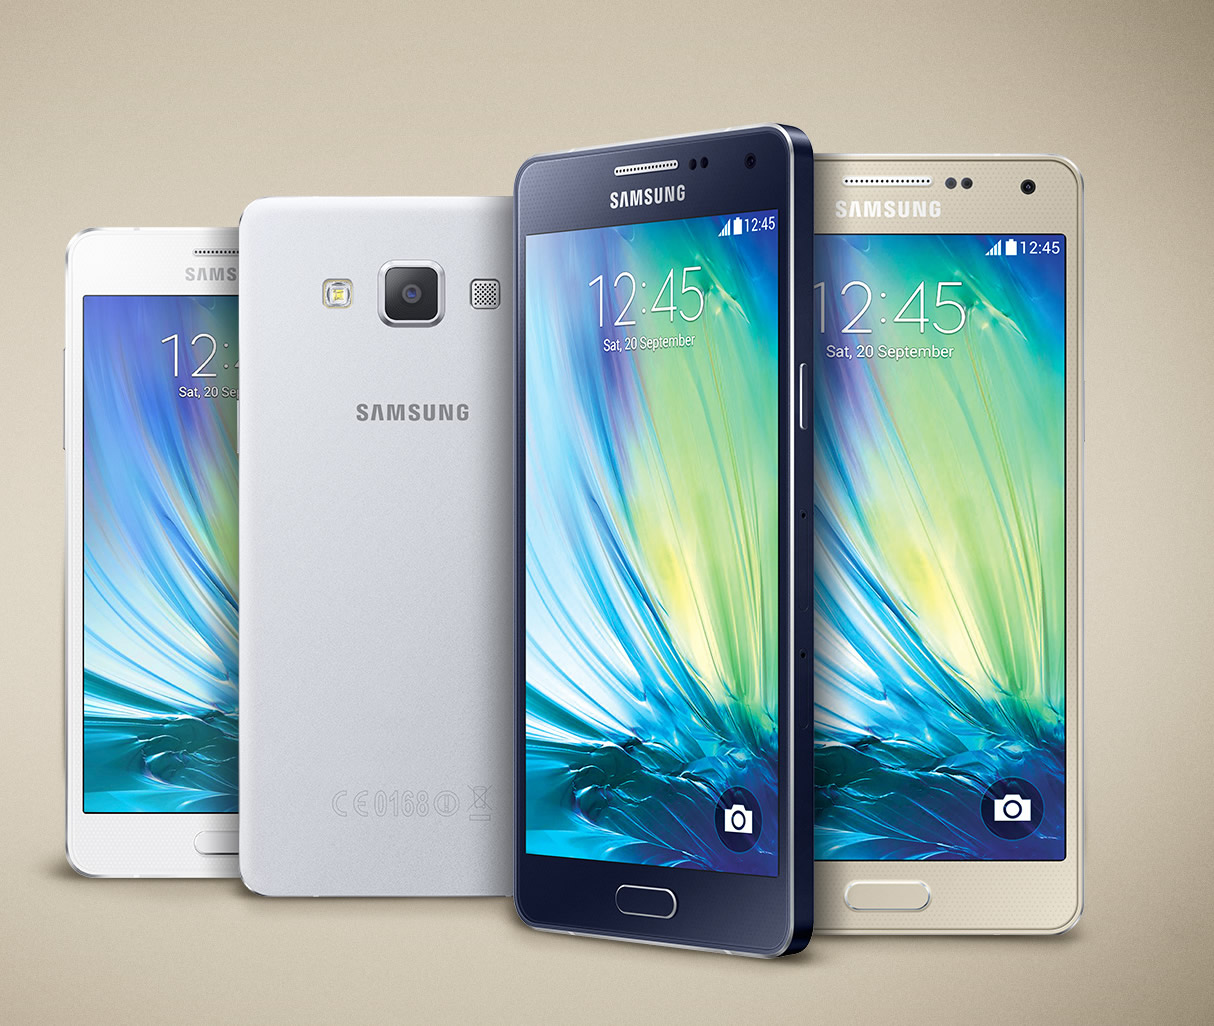 pico Hora Complaciente Samsung Galaxy A5 Review